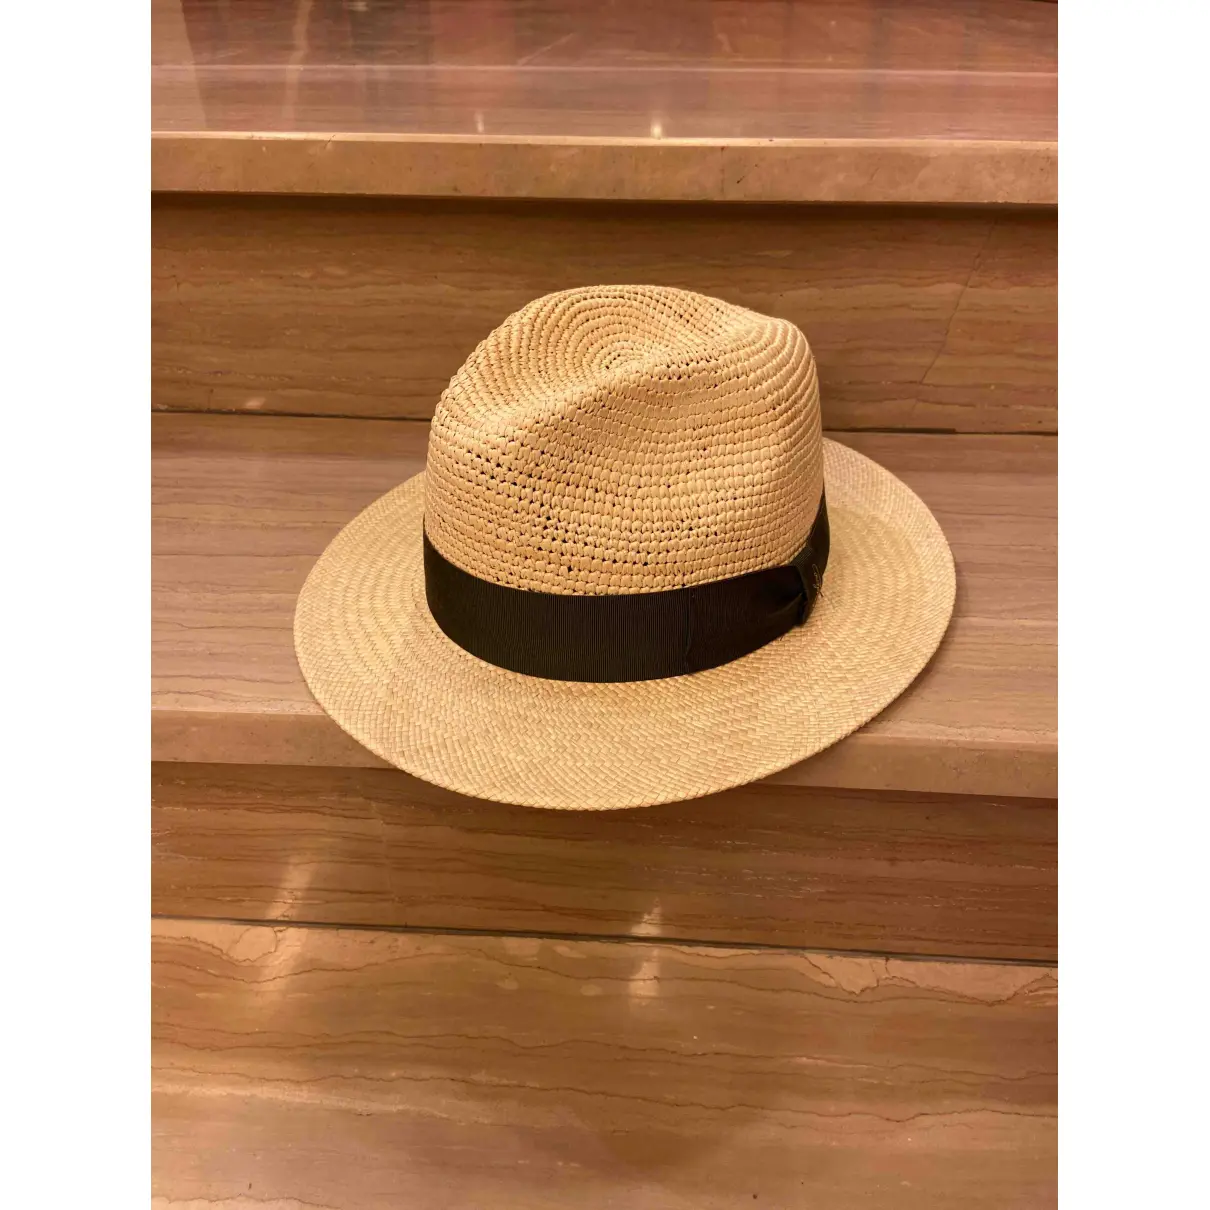 Buy Borsalino Ecru Wicker Hat online